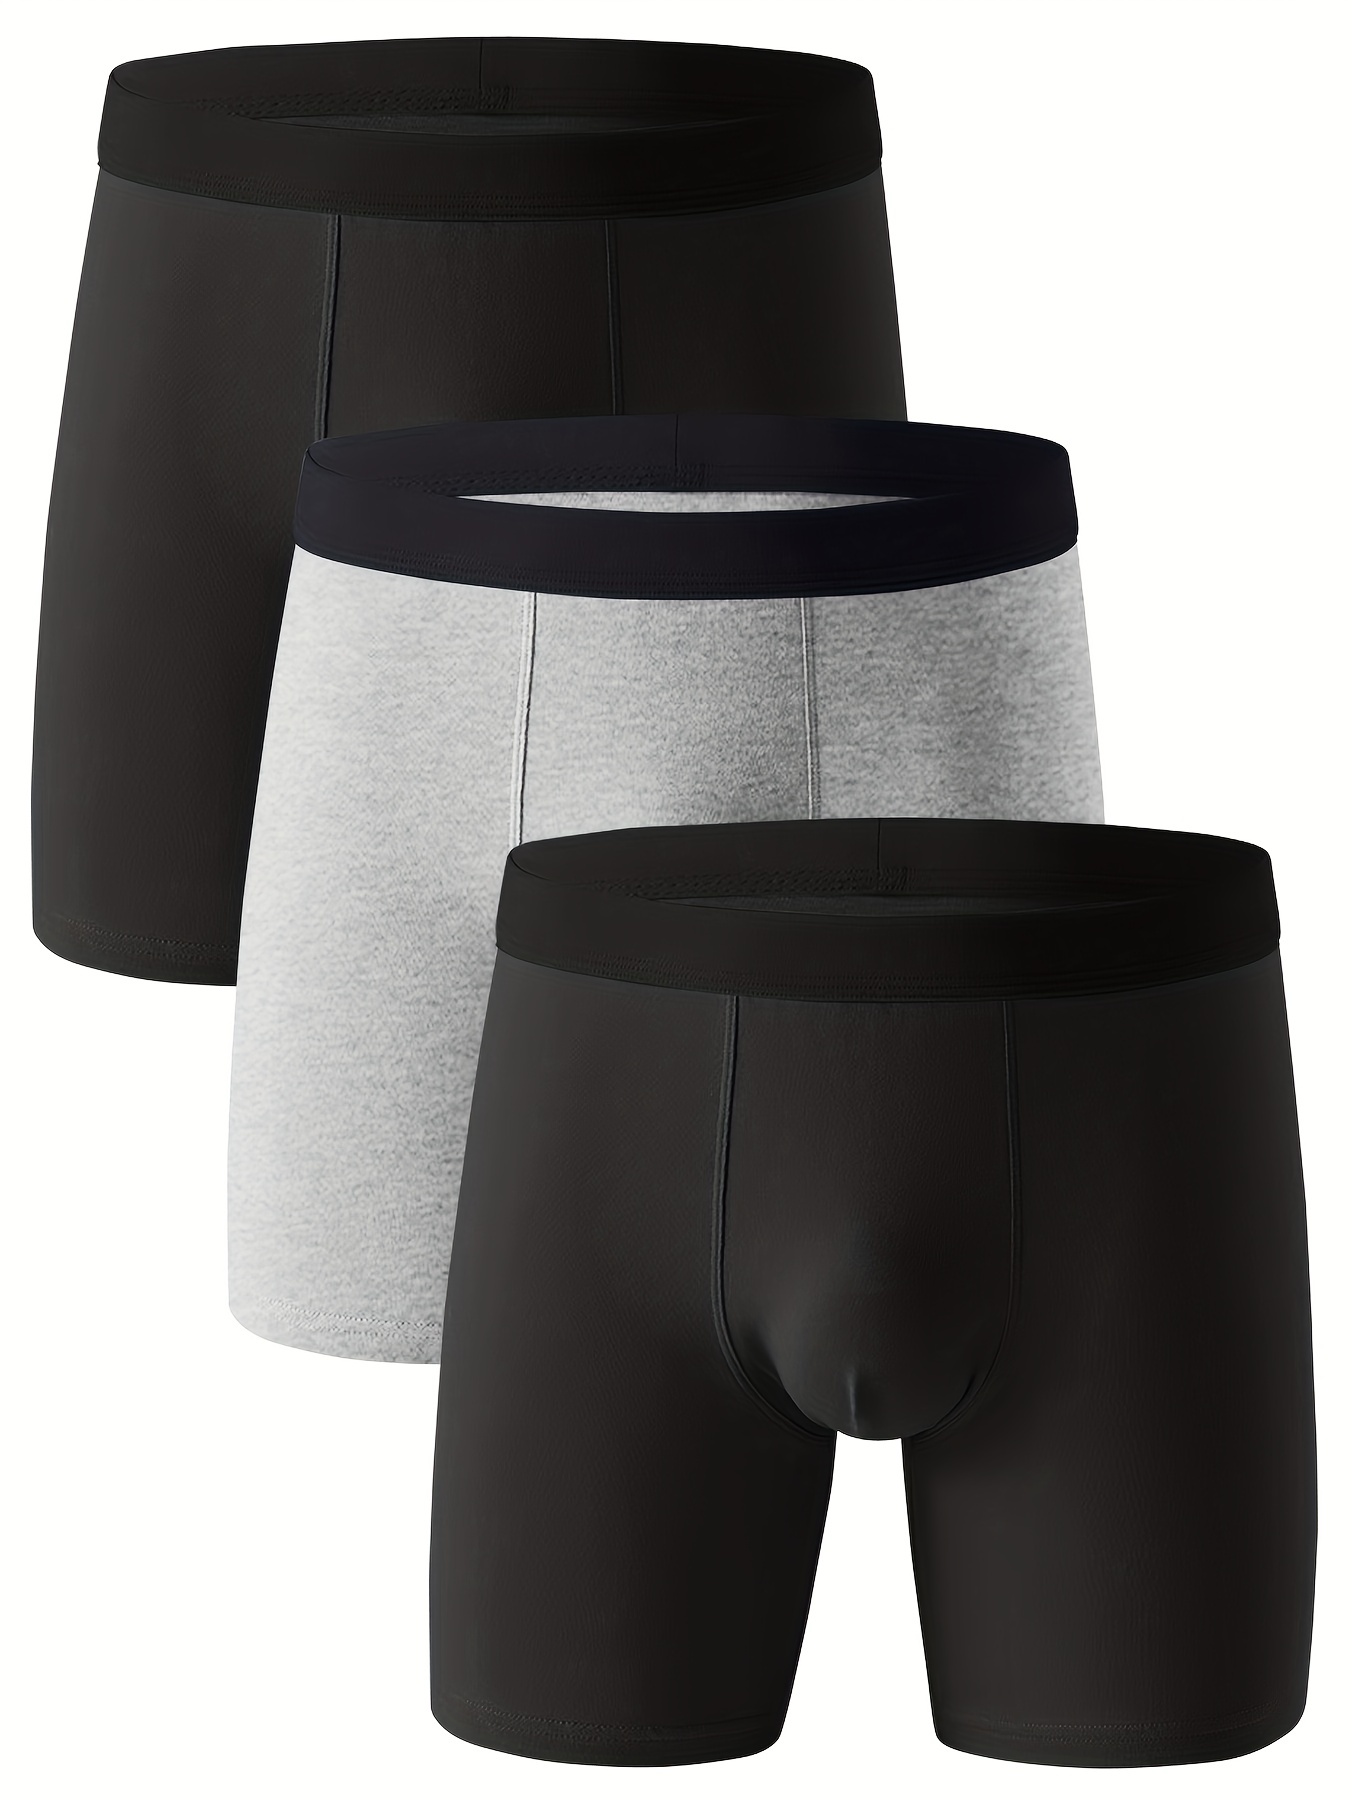 Soft Solid Boxer Briefs for Men Underpants Laid Flat Data (Black